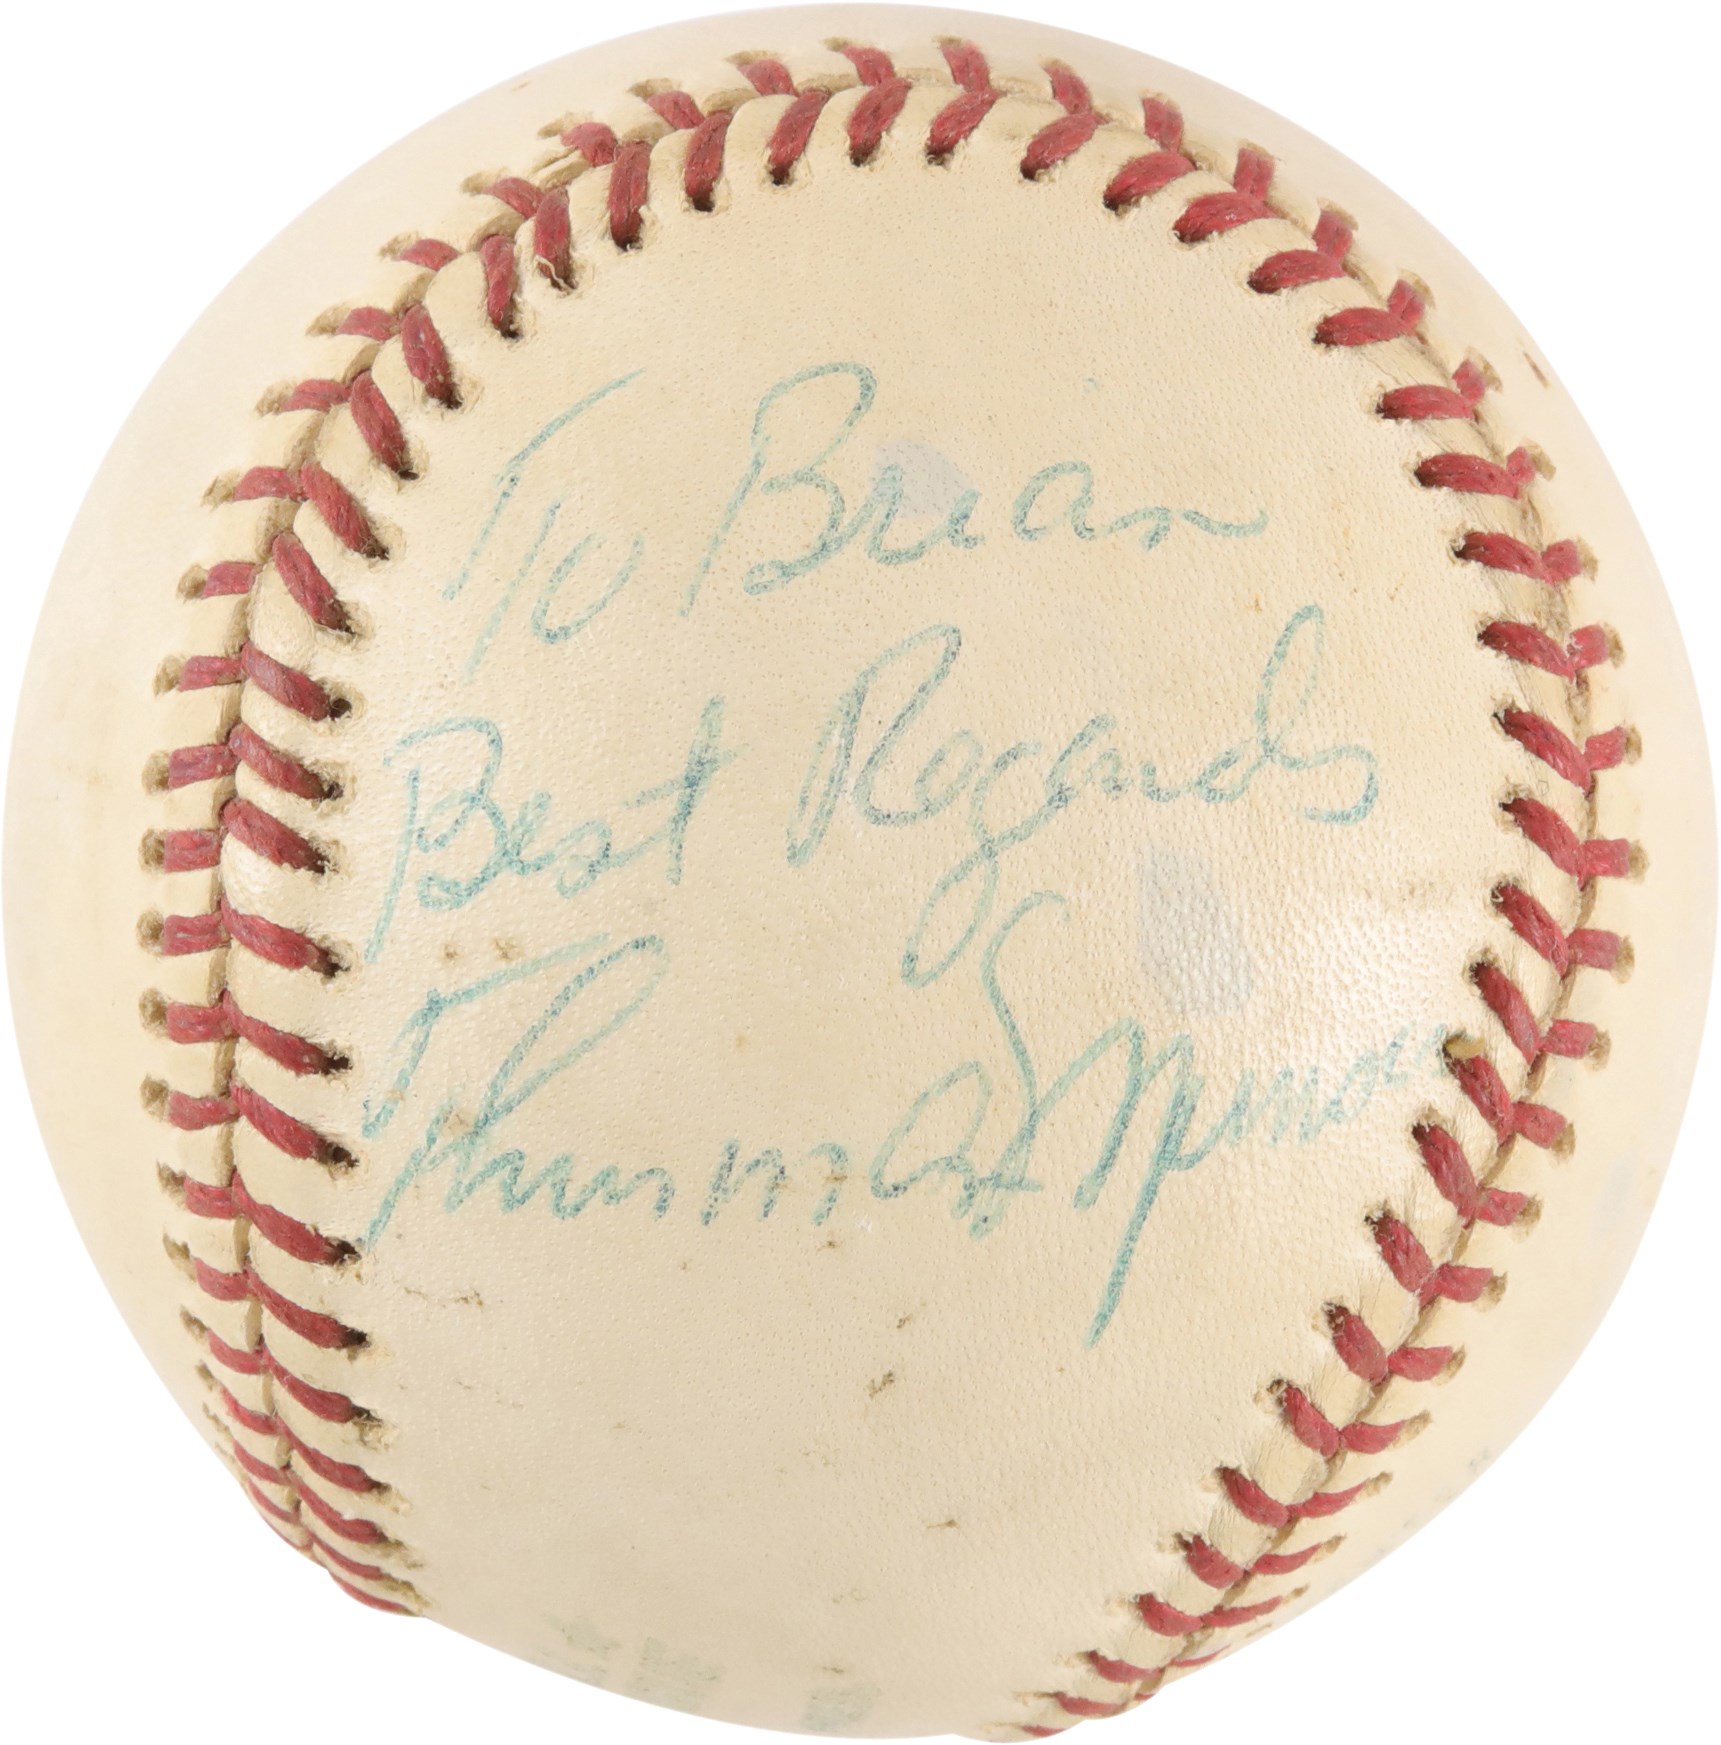 - 1976 Thurman Munson "To Brian" Single-Signed Baseball (PSA)